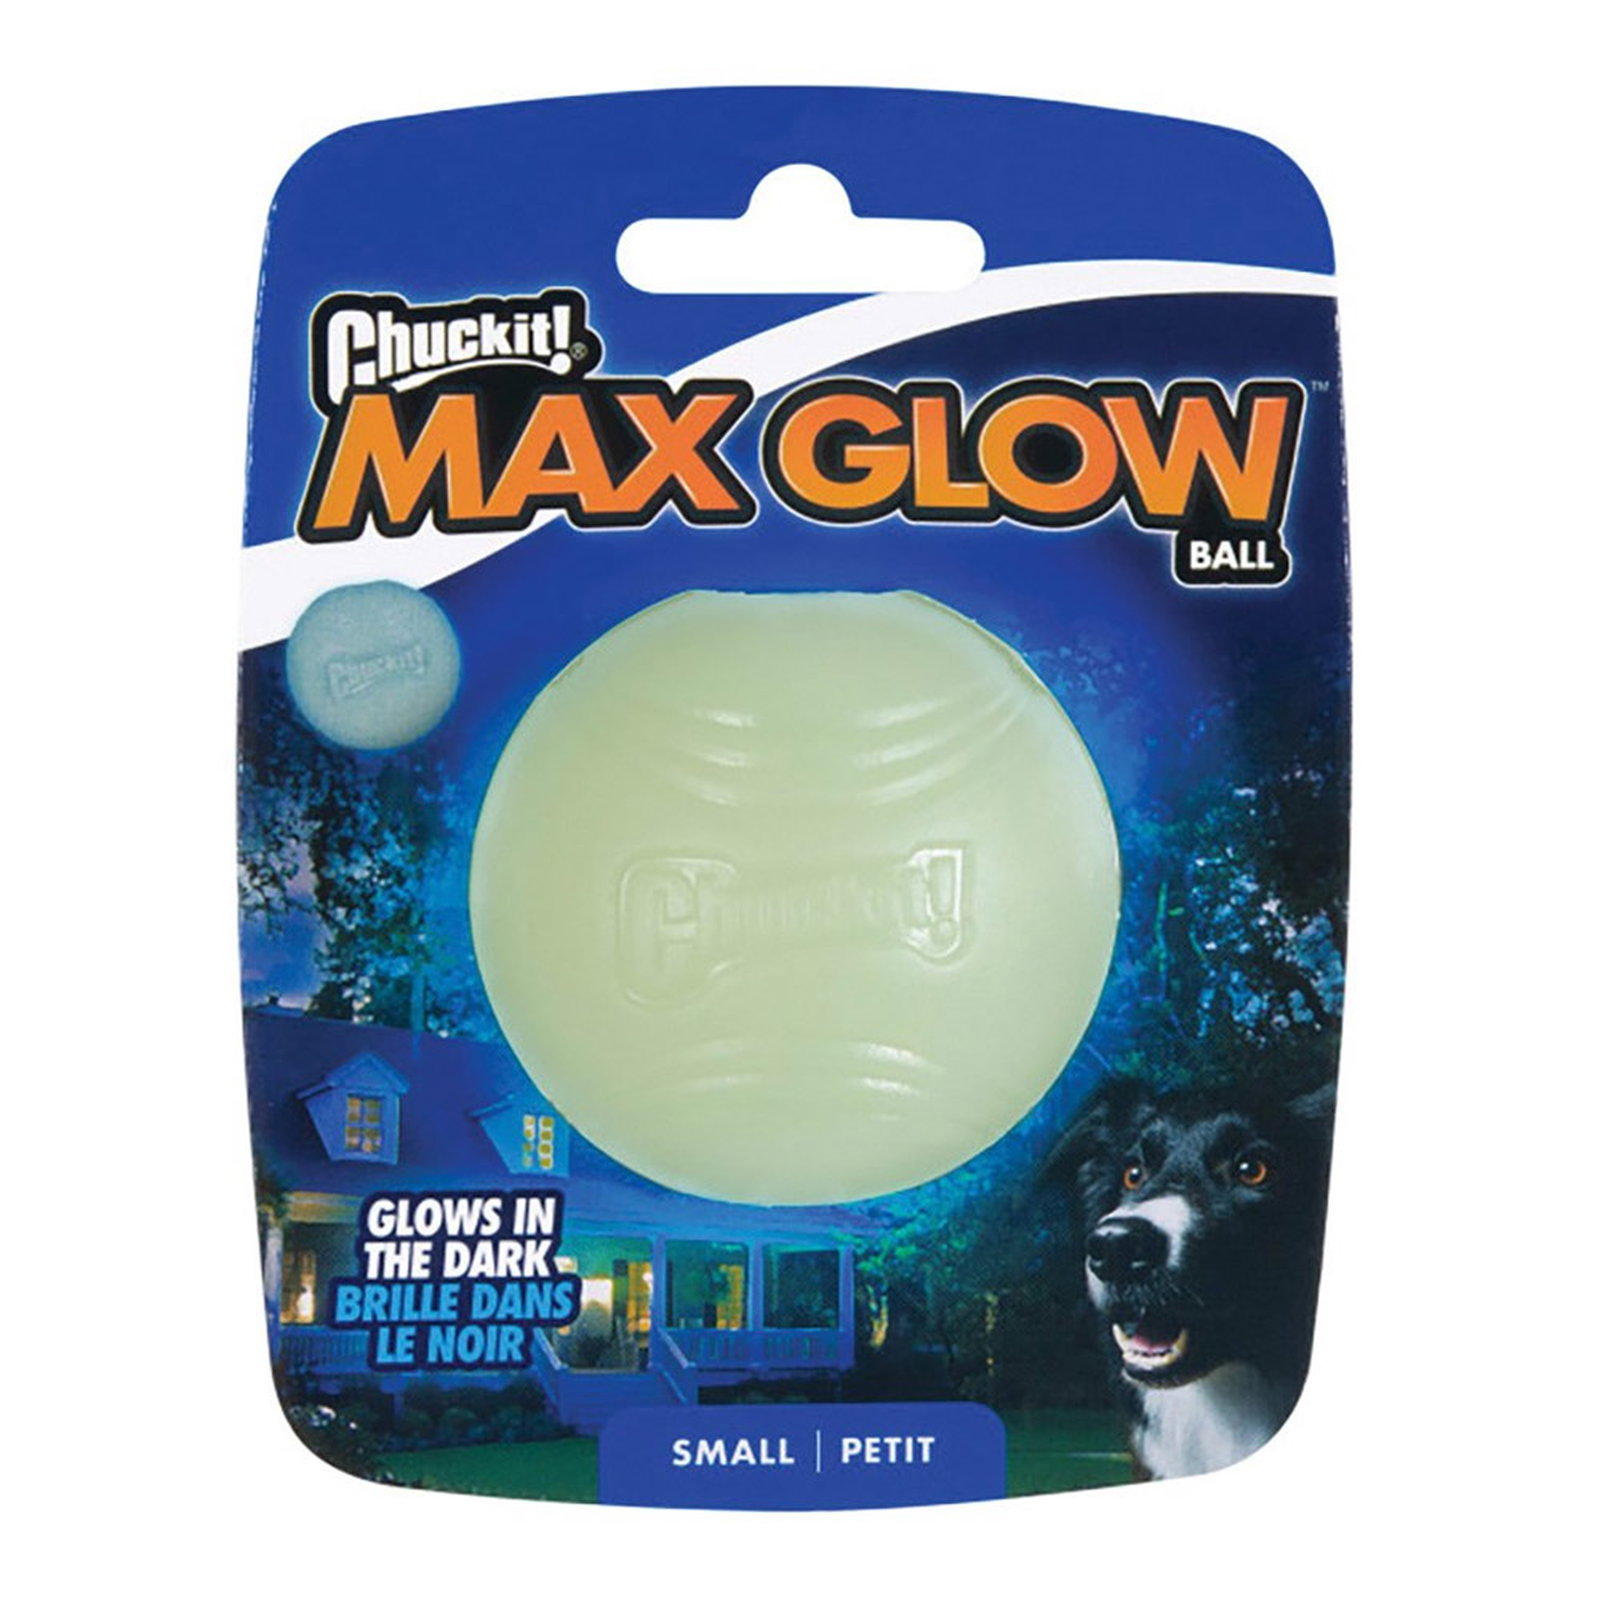 Chuckit! - Max Glow ball